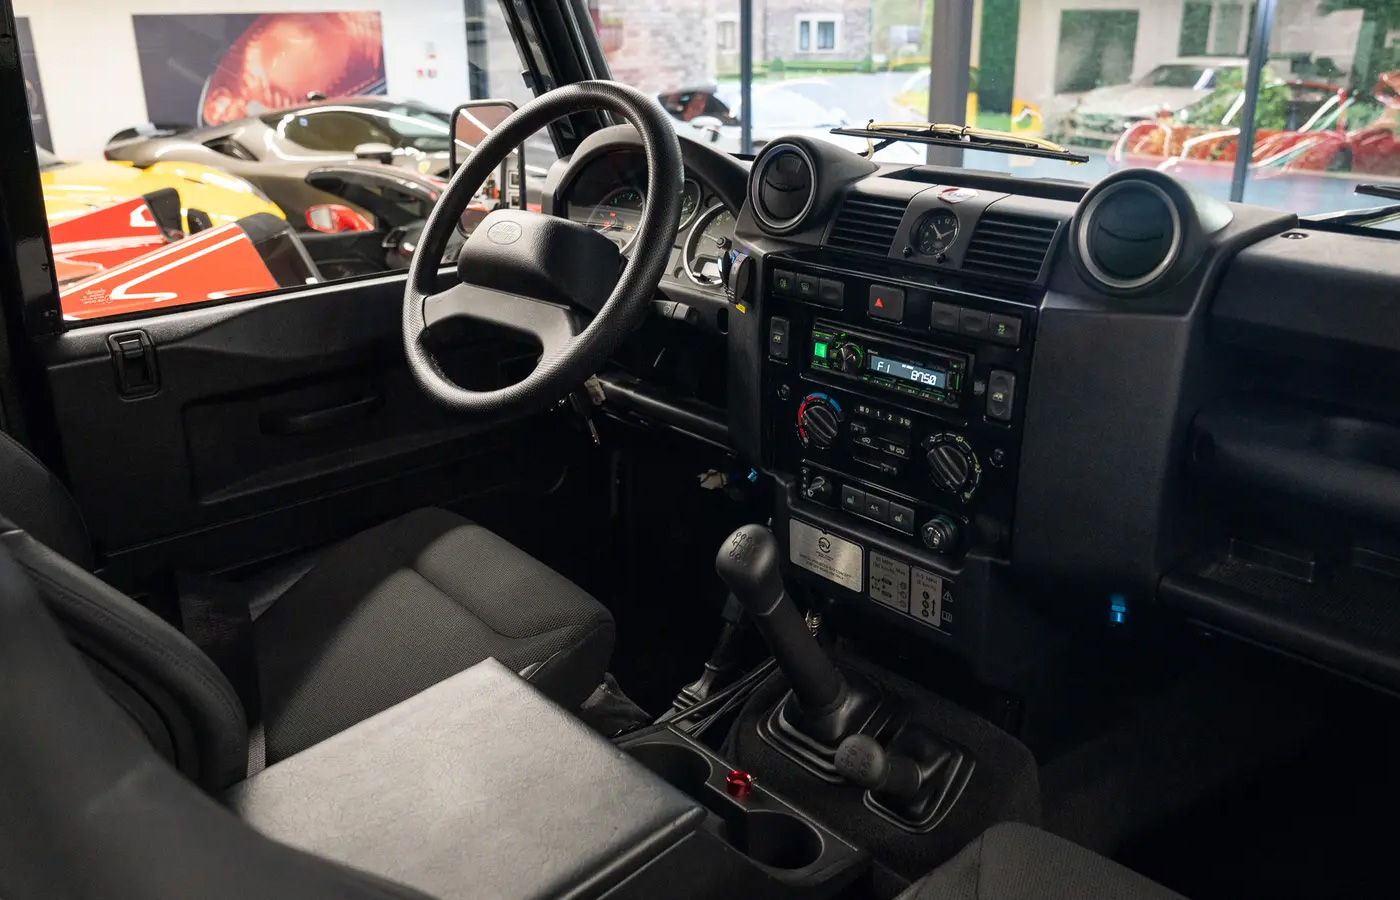 Land Rover Defender 110 SVX 007 SPECTRE edition for sale Tom Hartley interior